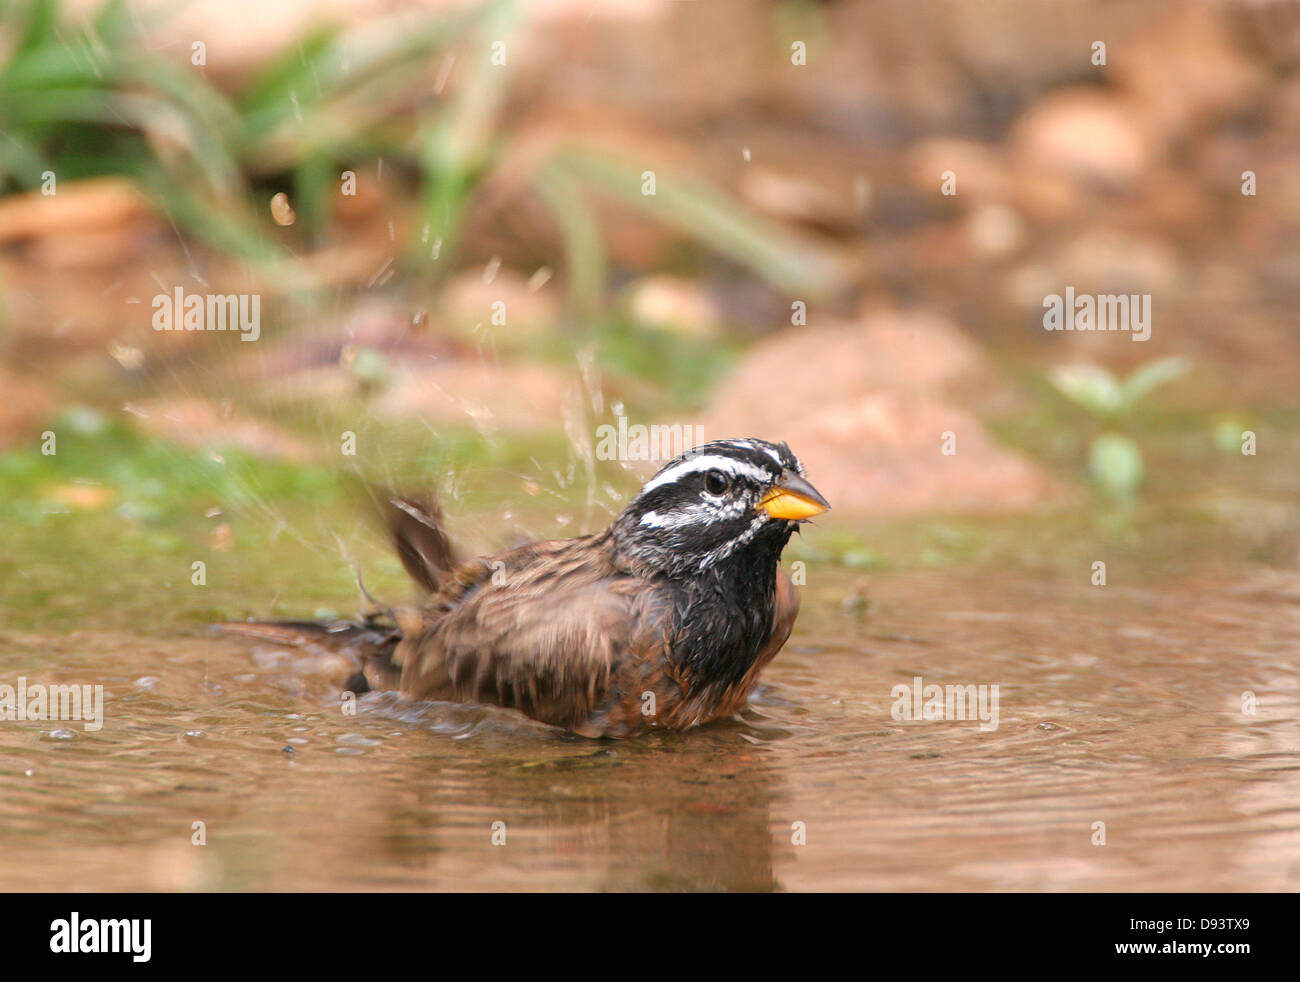 Ibis bird swimming in water Stock Photo